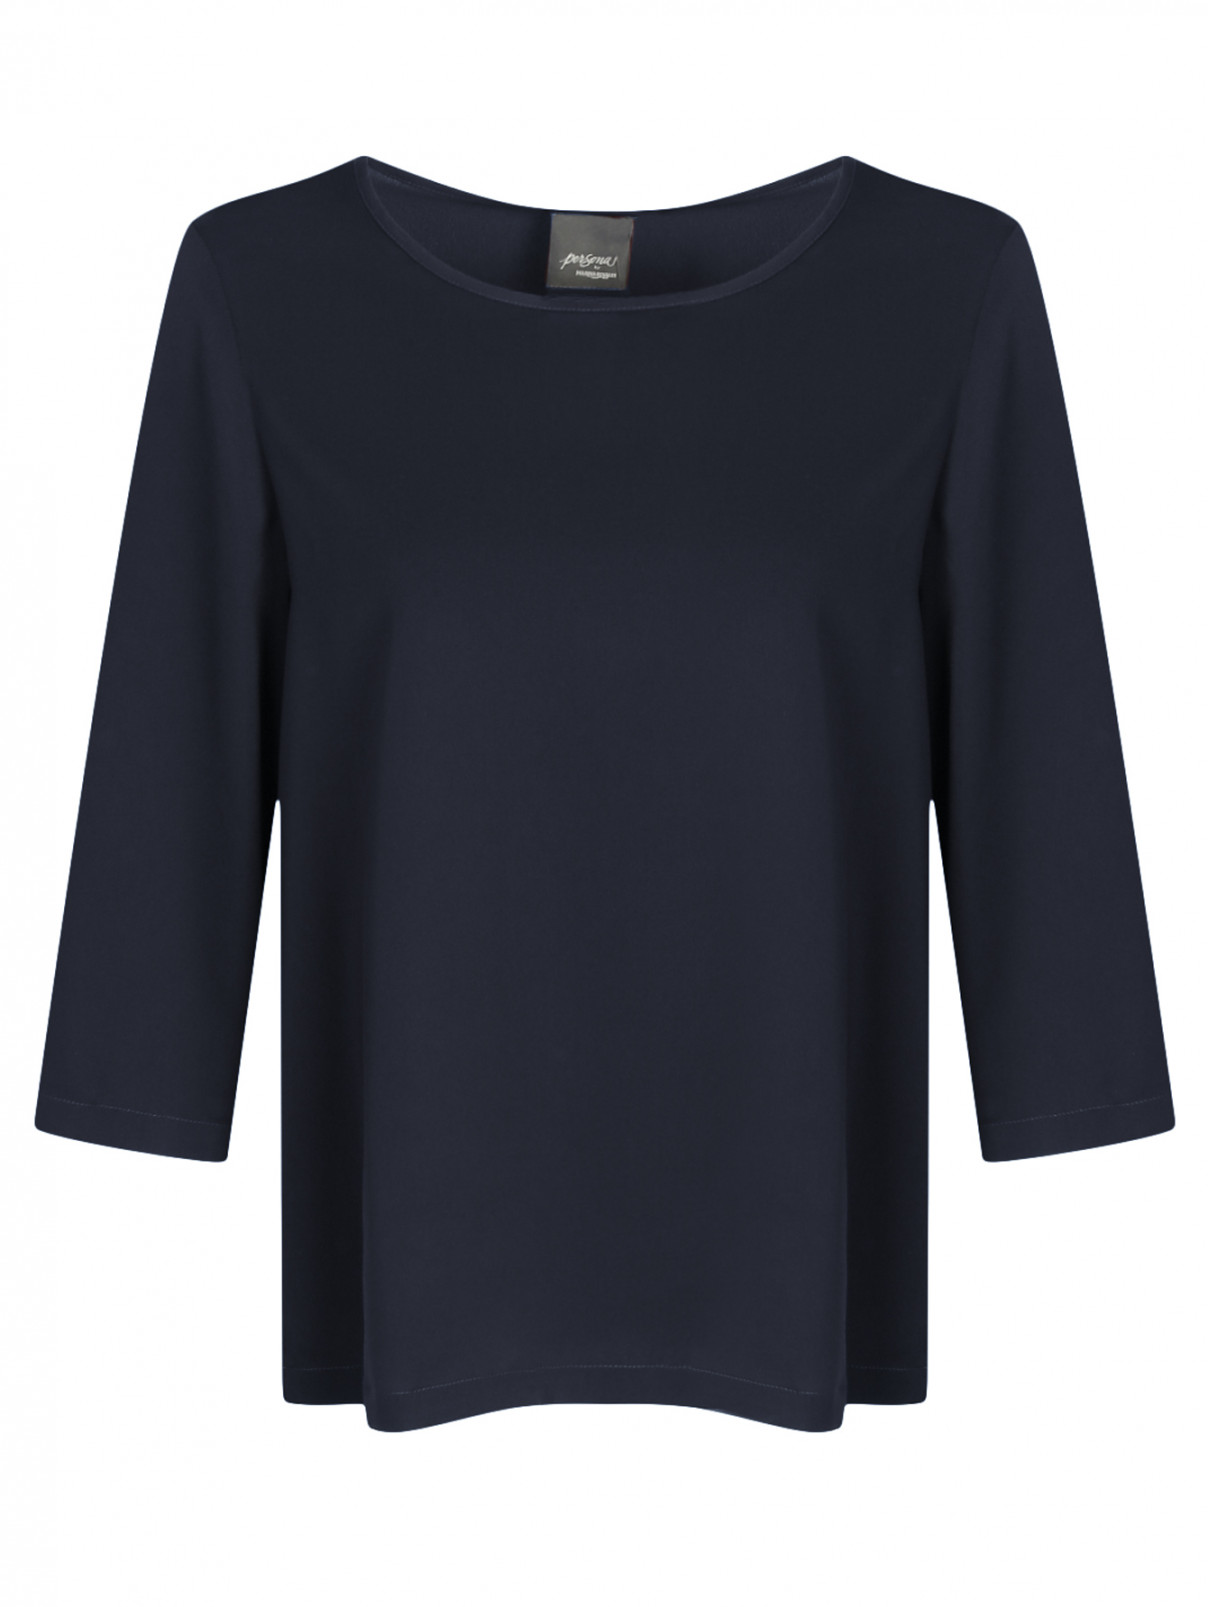 Блуза с рукавами 3/4 Persona by Marina Rinaldi  –  Общий вид  – Цвет:  Синий